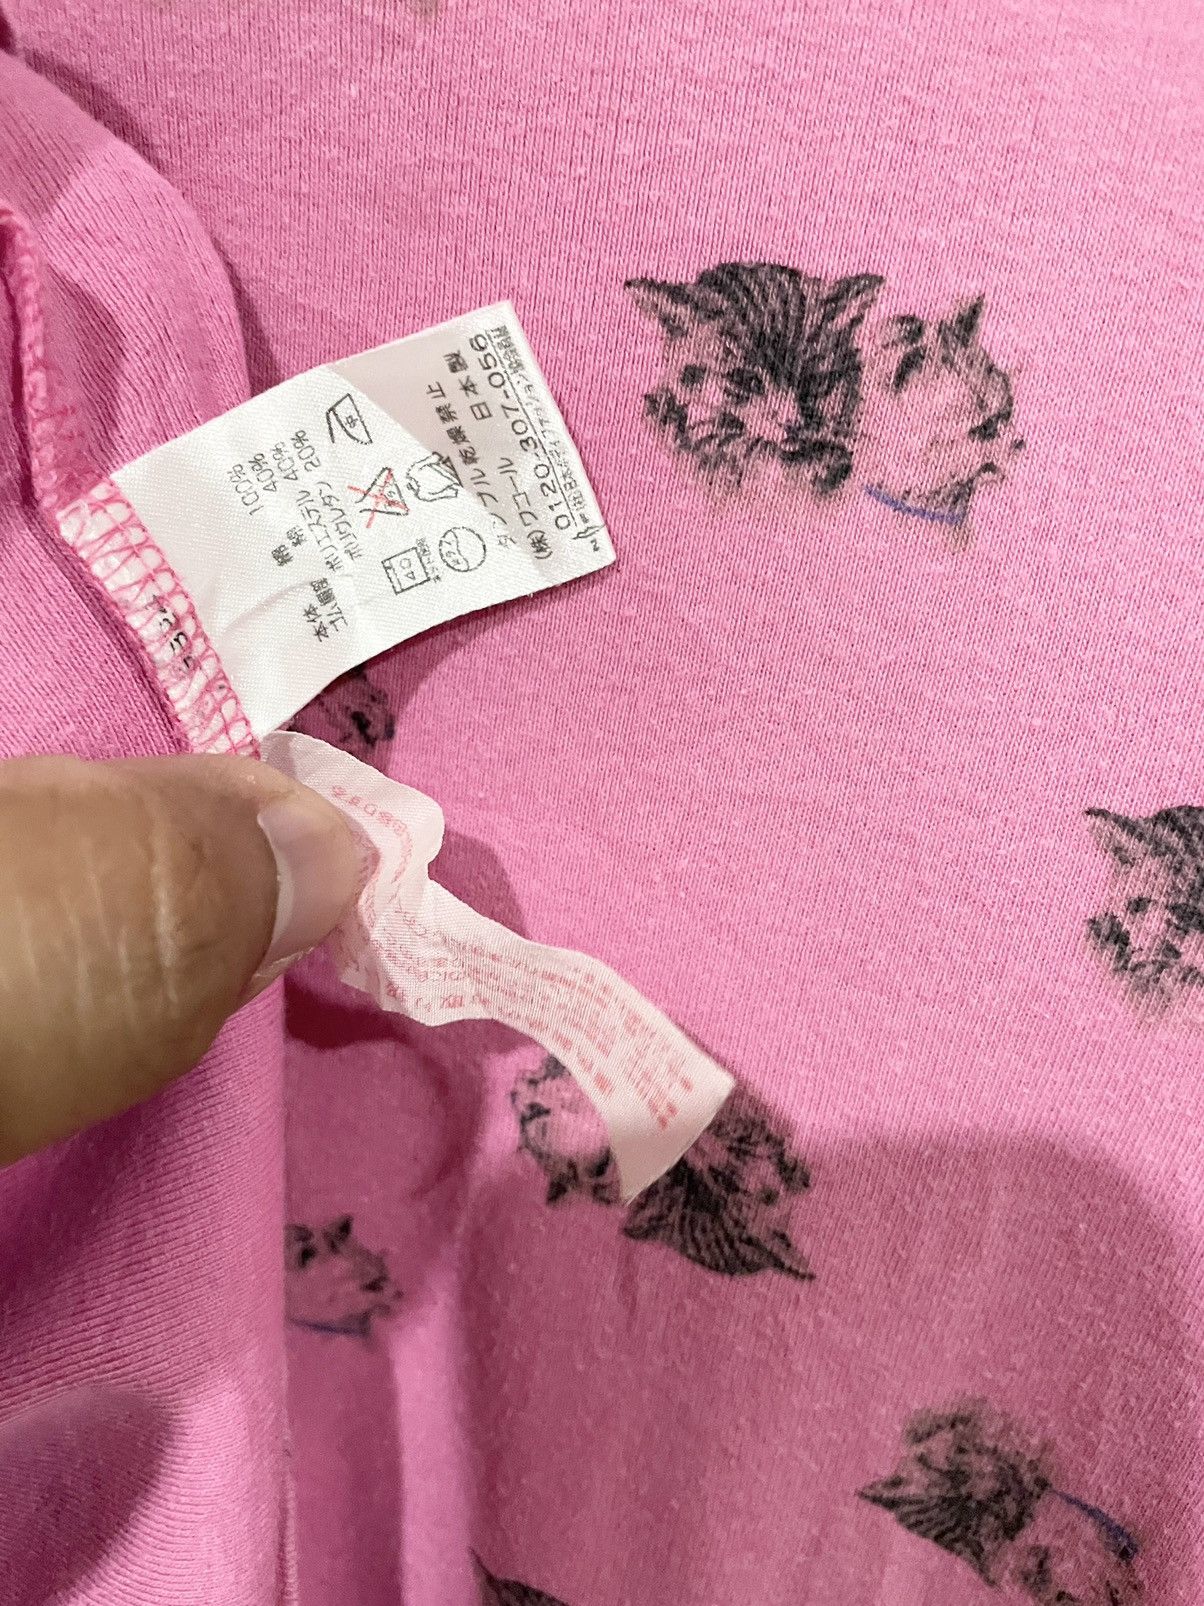 Issey Miyake Rare🌹 Tsumori Chisato Issey Miyake All Over Print Cats Shirt Size M / US 6-8 / IT 42-44 - 8 Thumbnail